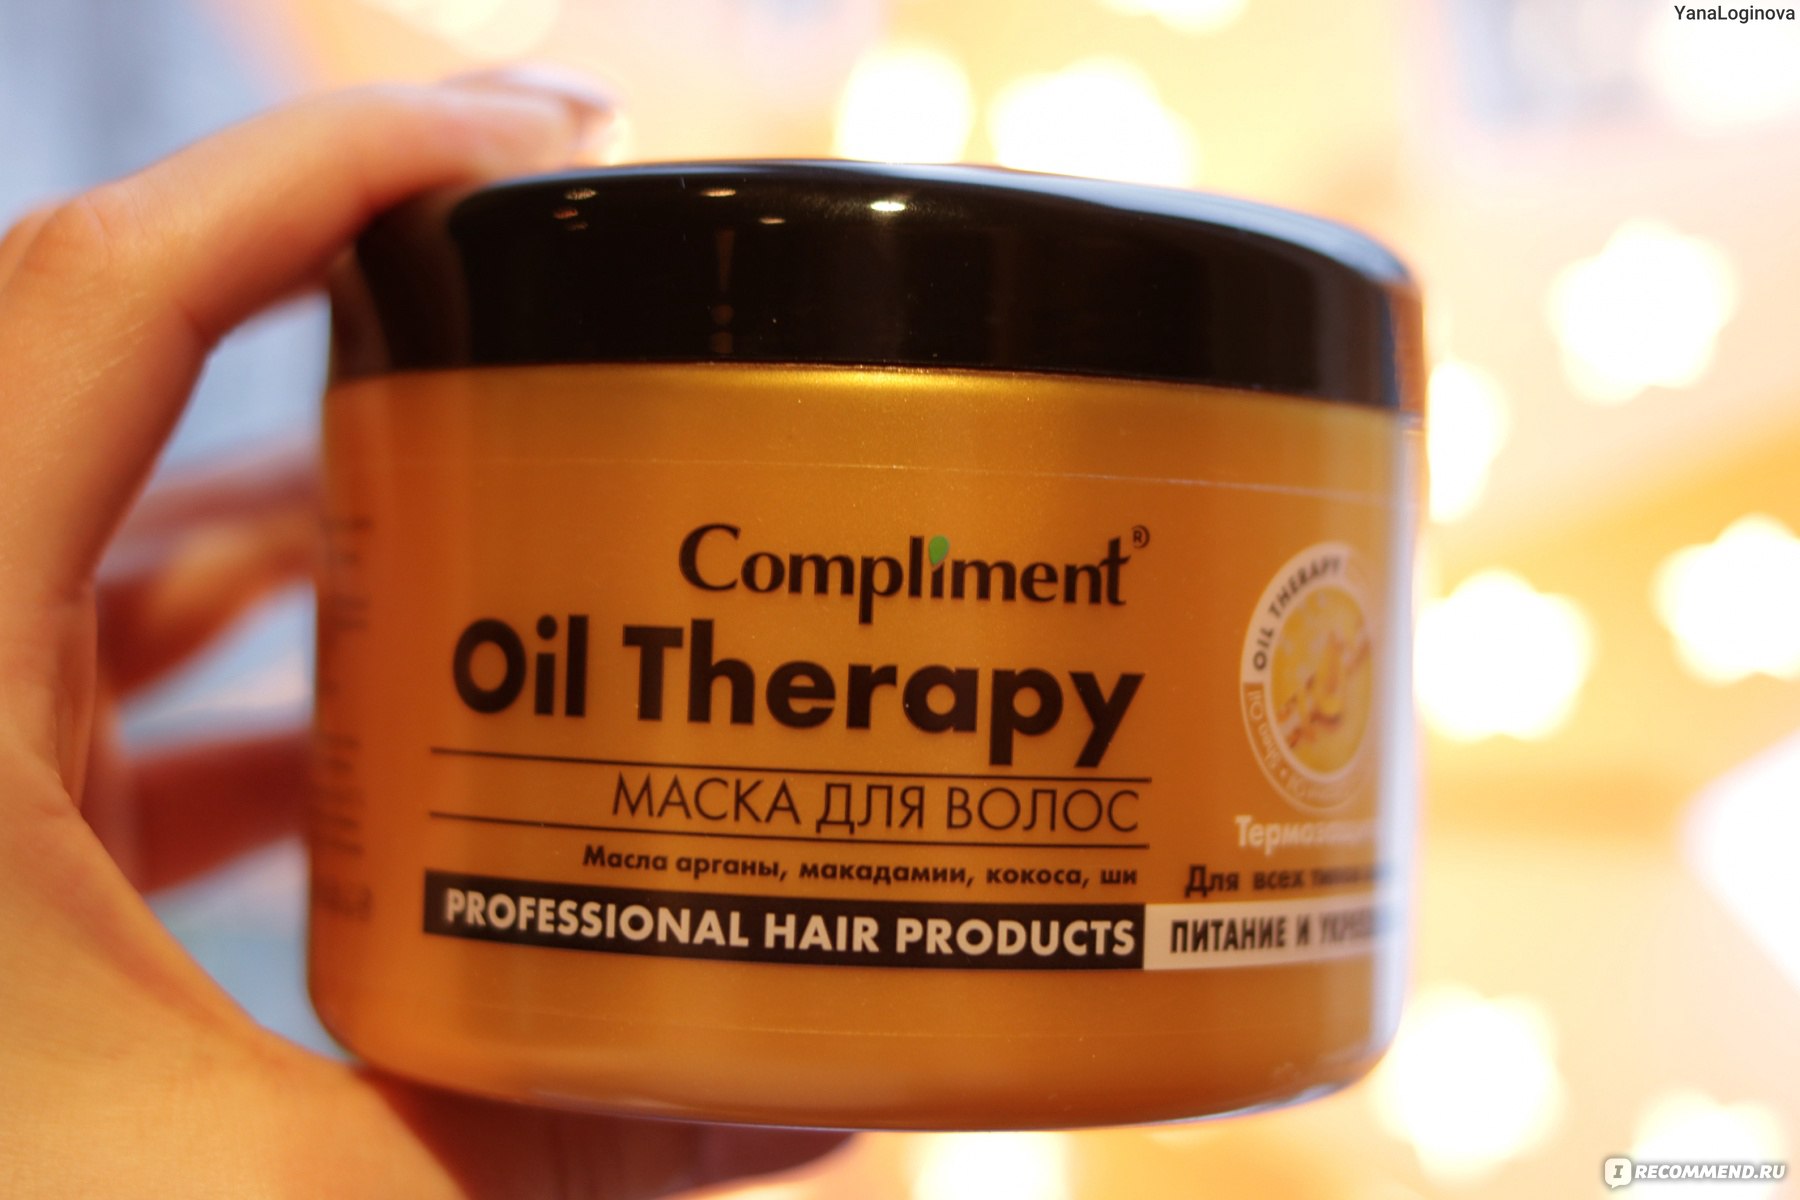 Therapy масло для волос. Маска для волос Oil Therapy. Compliment Oil Therapy маска. Маска для волос комплимент Oil. Compliment маска для волос Oil Therapy с маслом арганы.